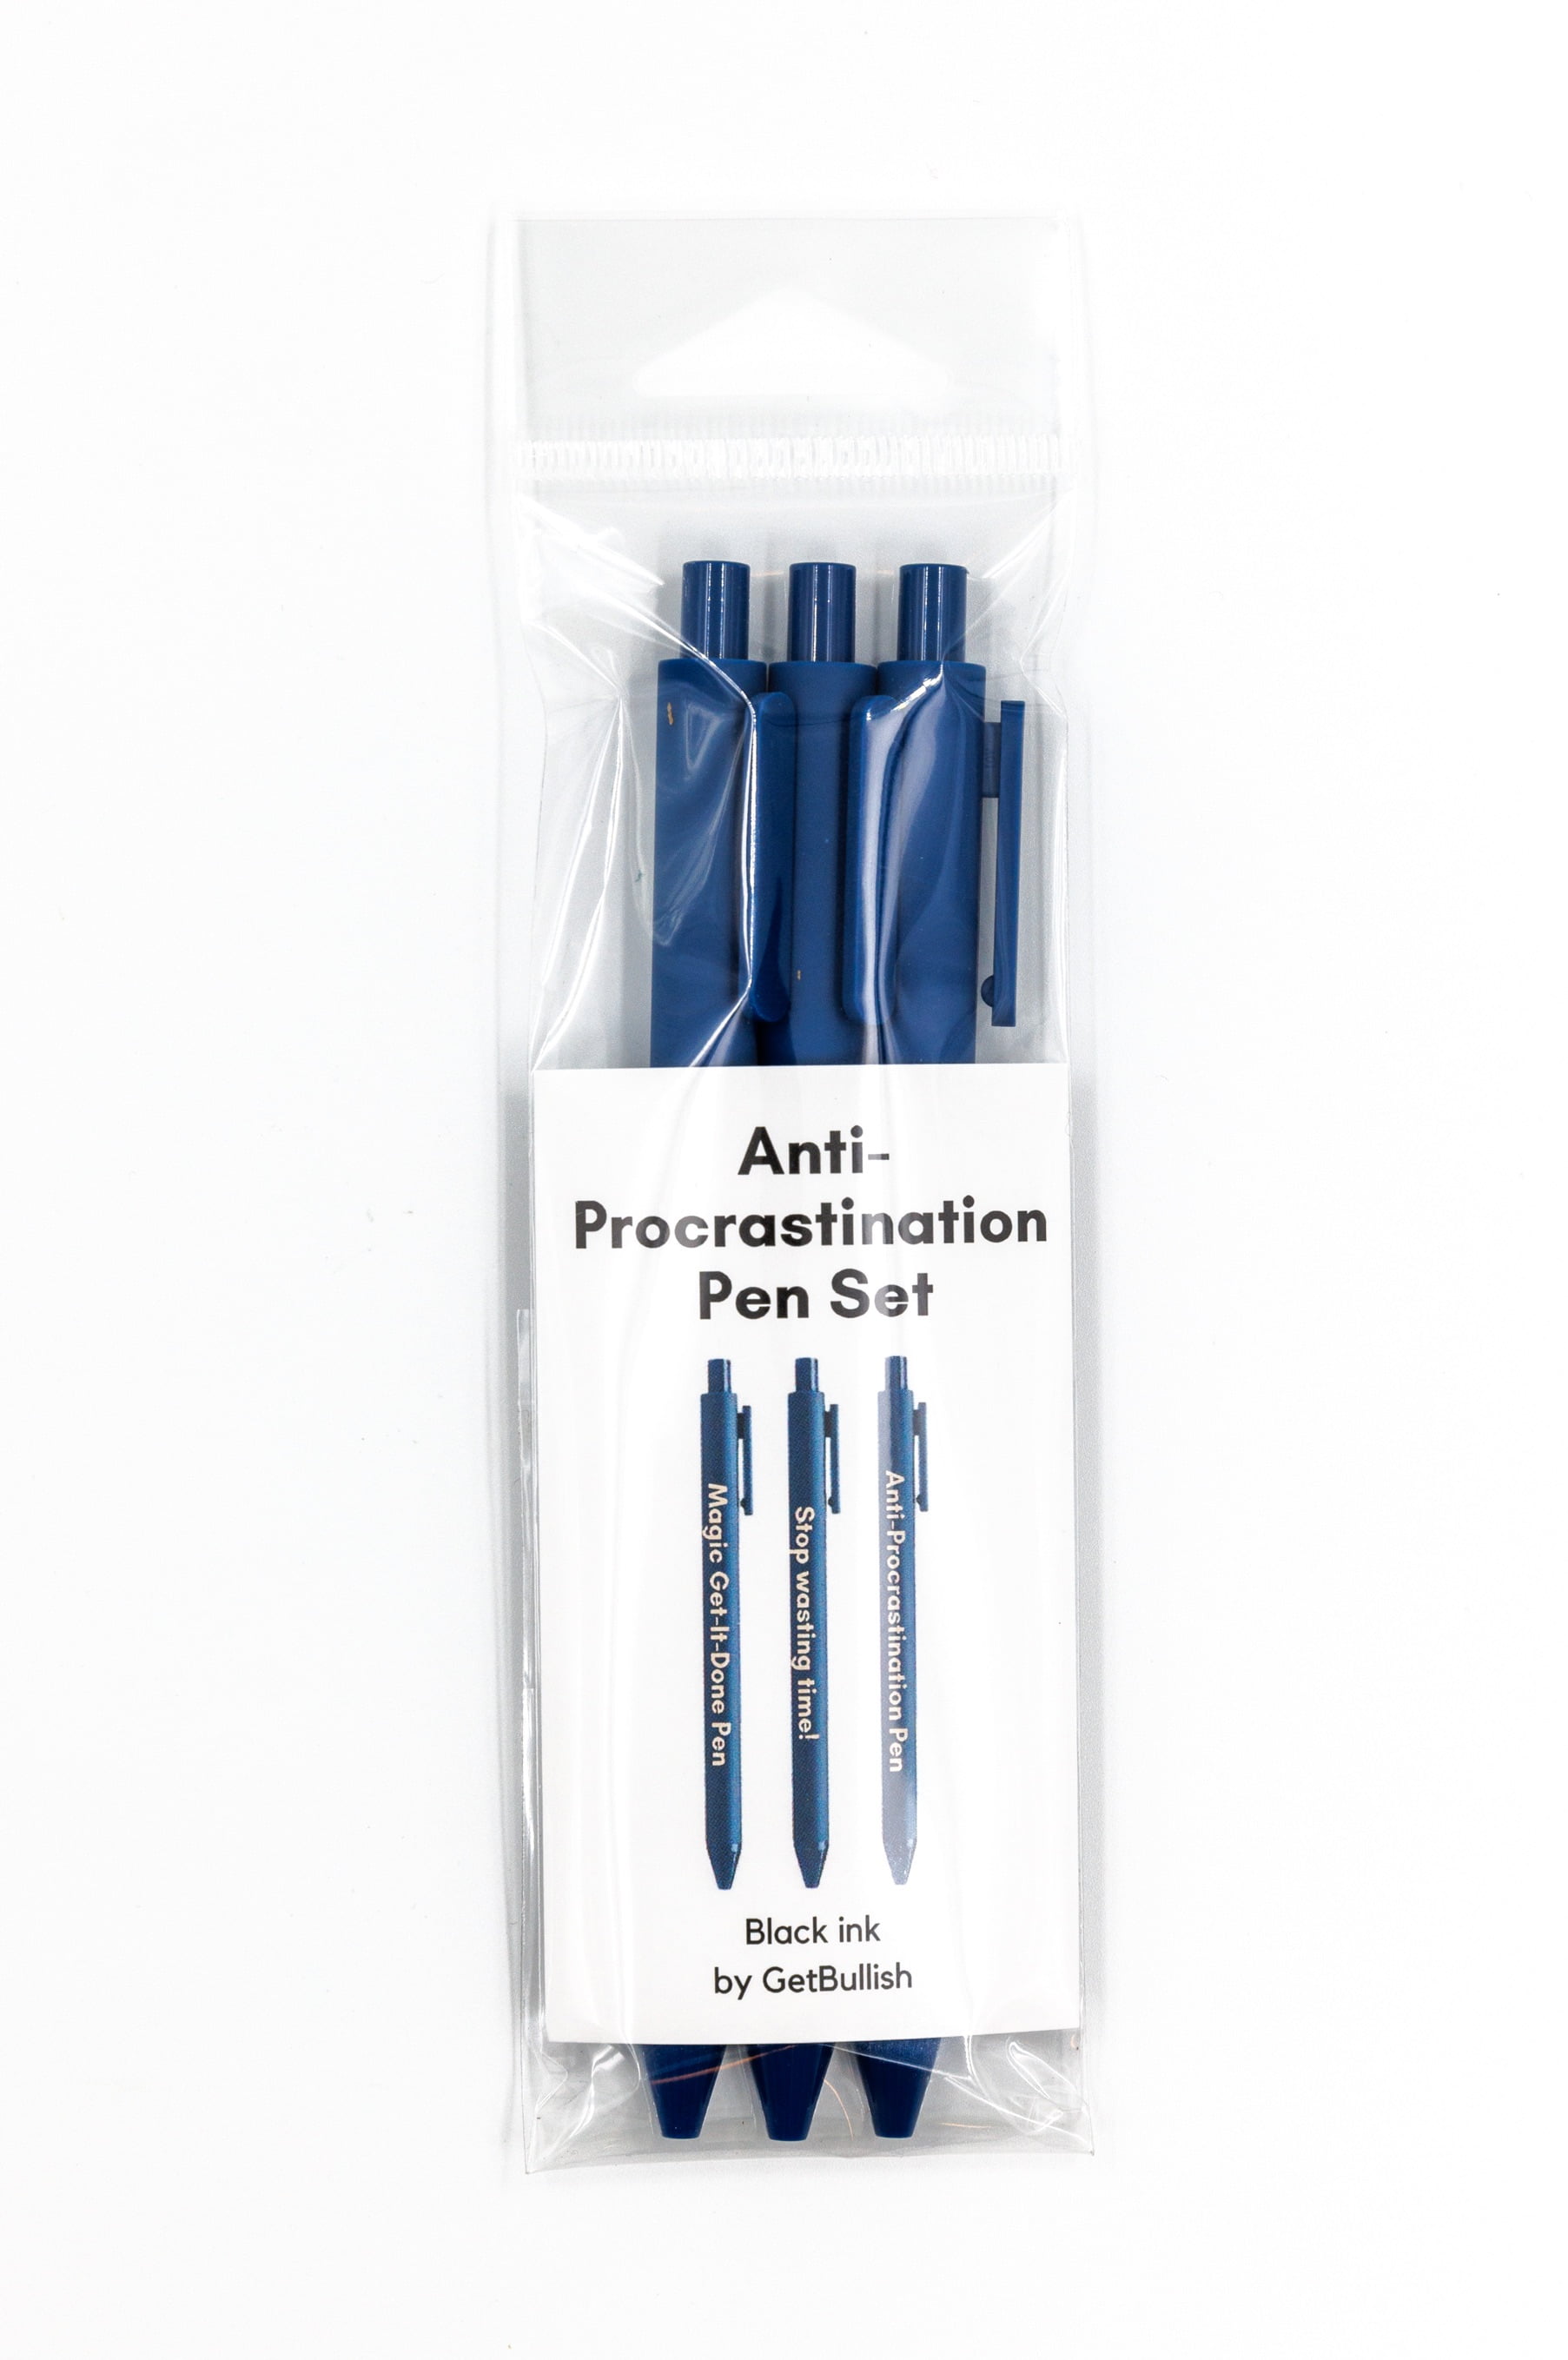 Professional Procrastinator Floaty Pen Set